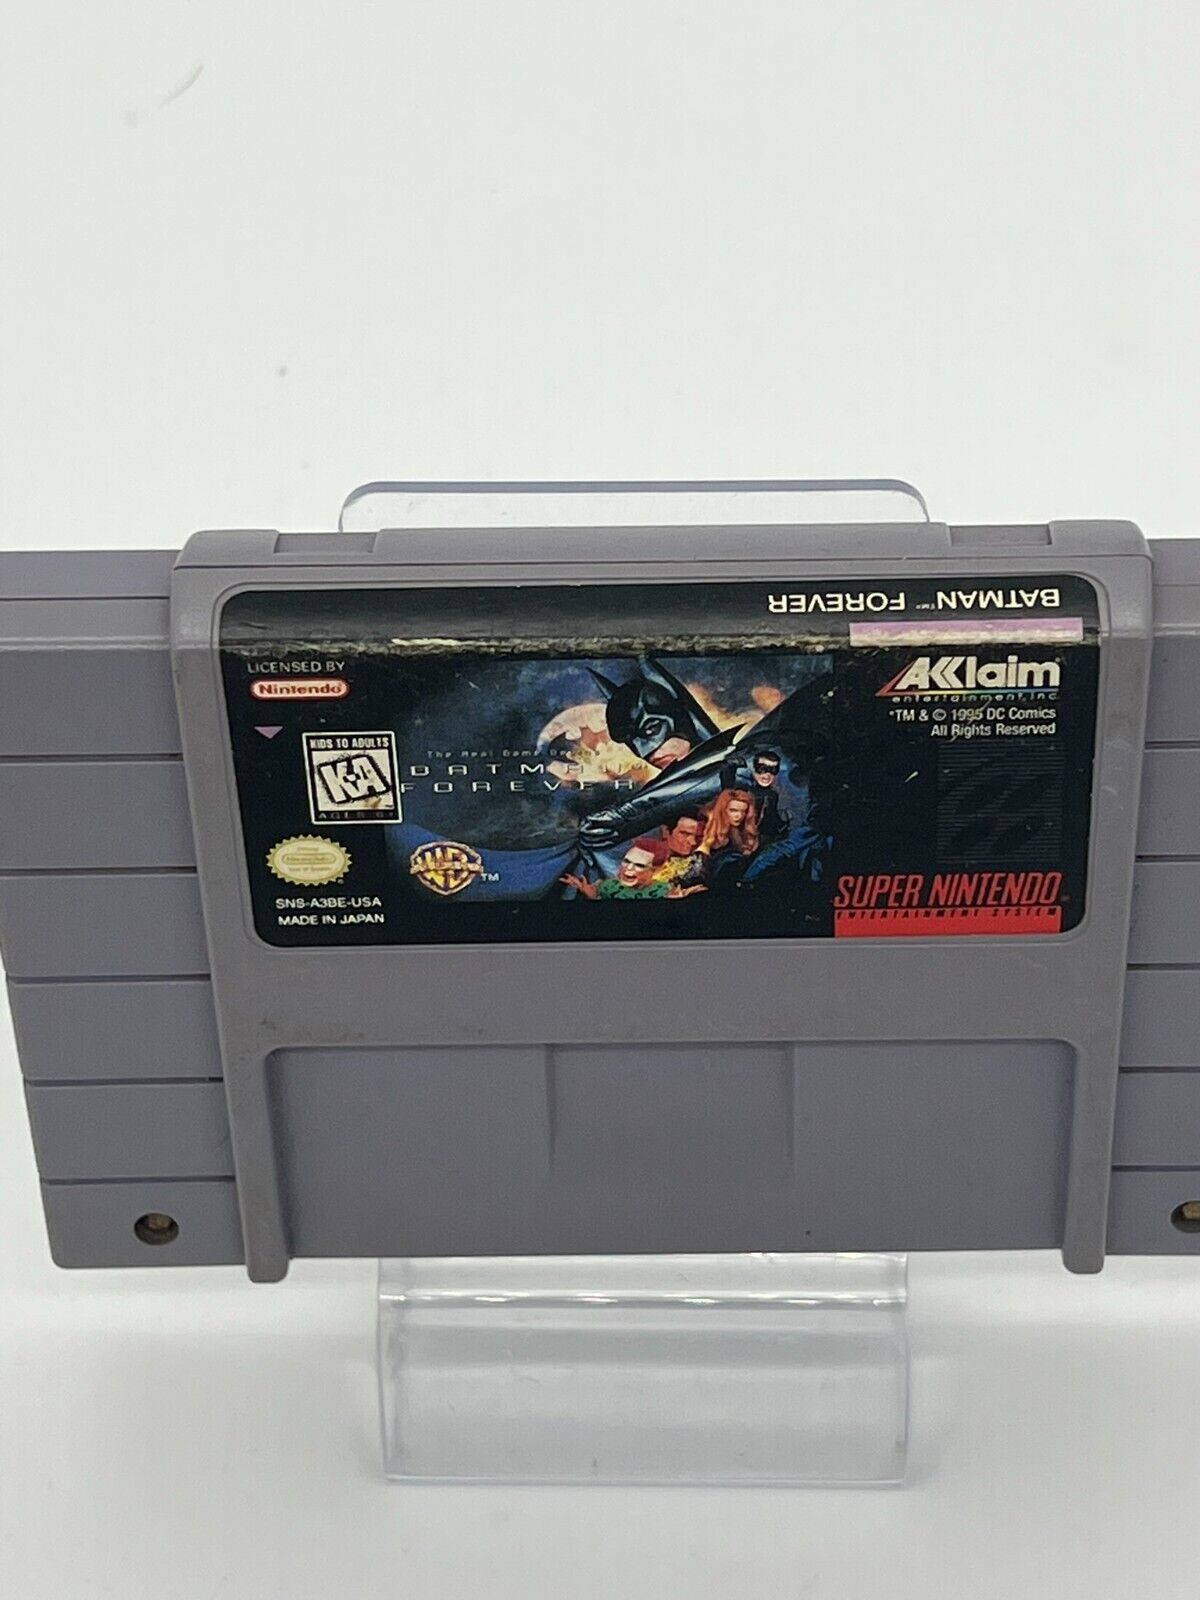 Batman Forever (Super Nintendo Entertainment System, 1995)